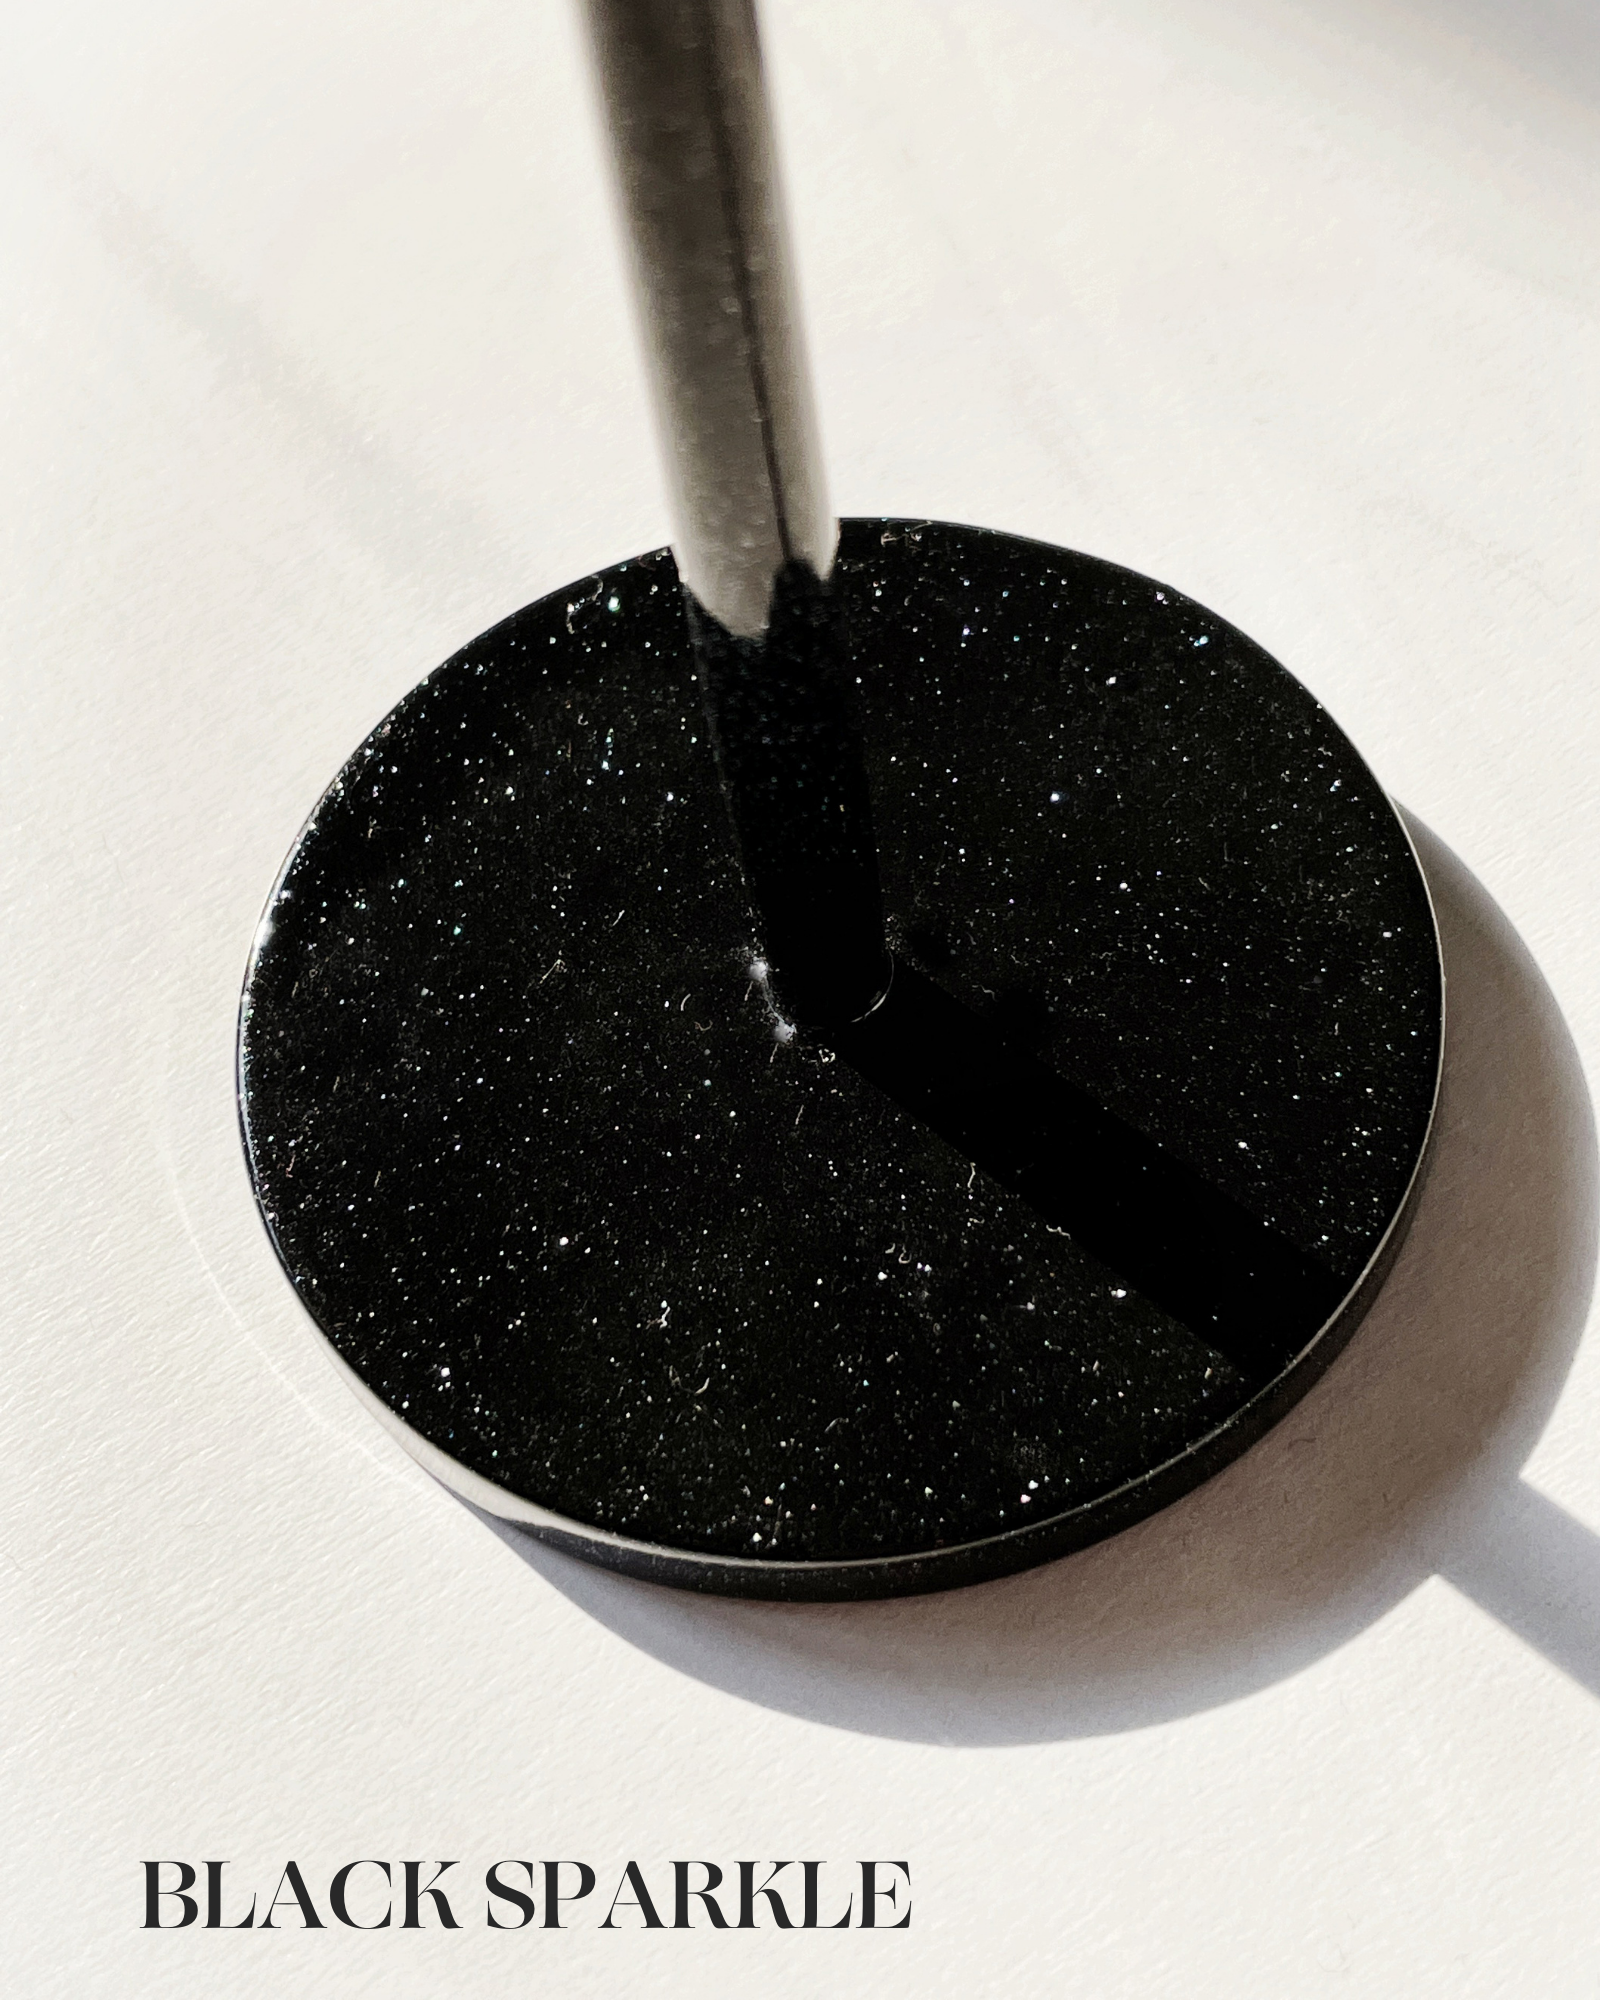 Lunar Moon Candlestick holder in black glitter sparkle colorway